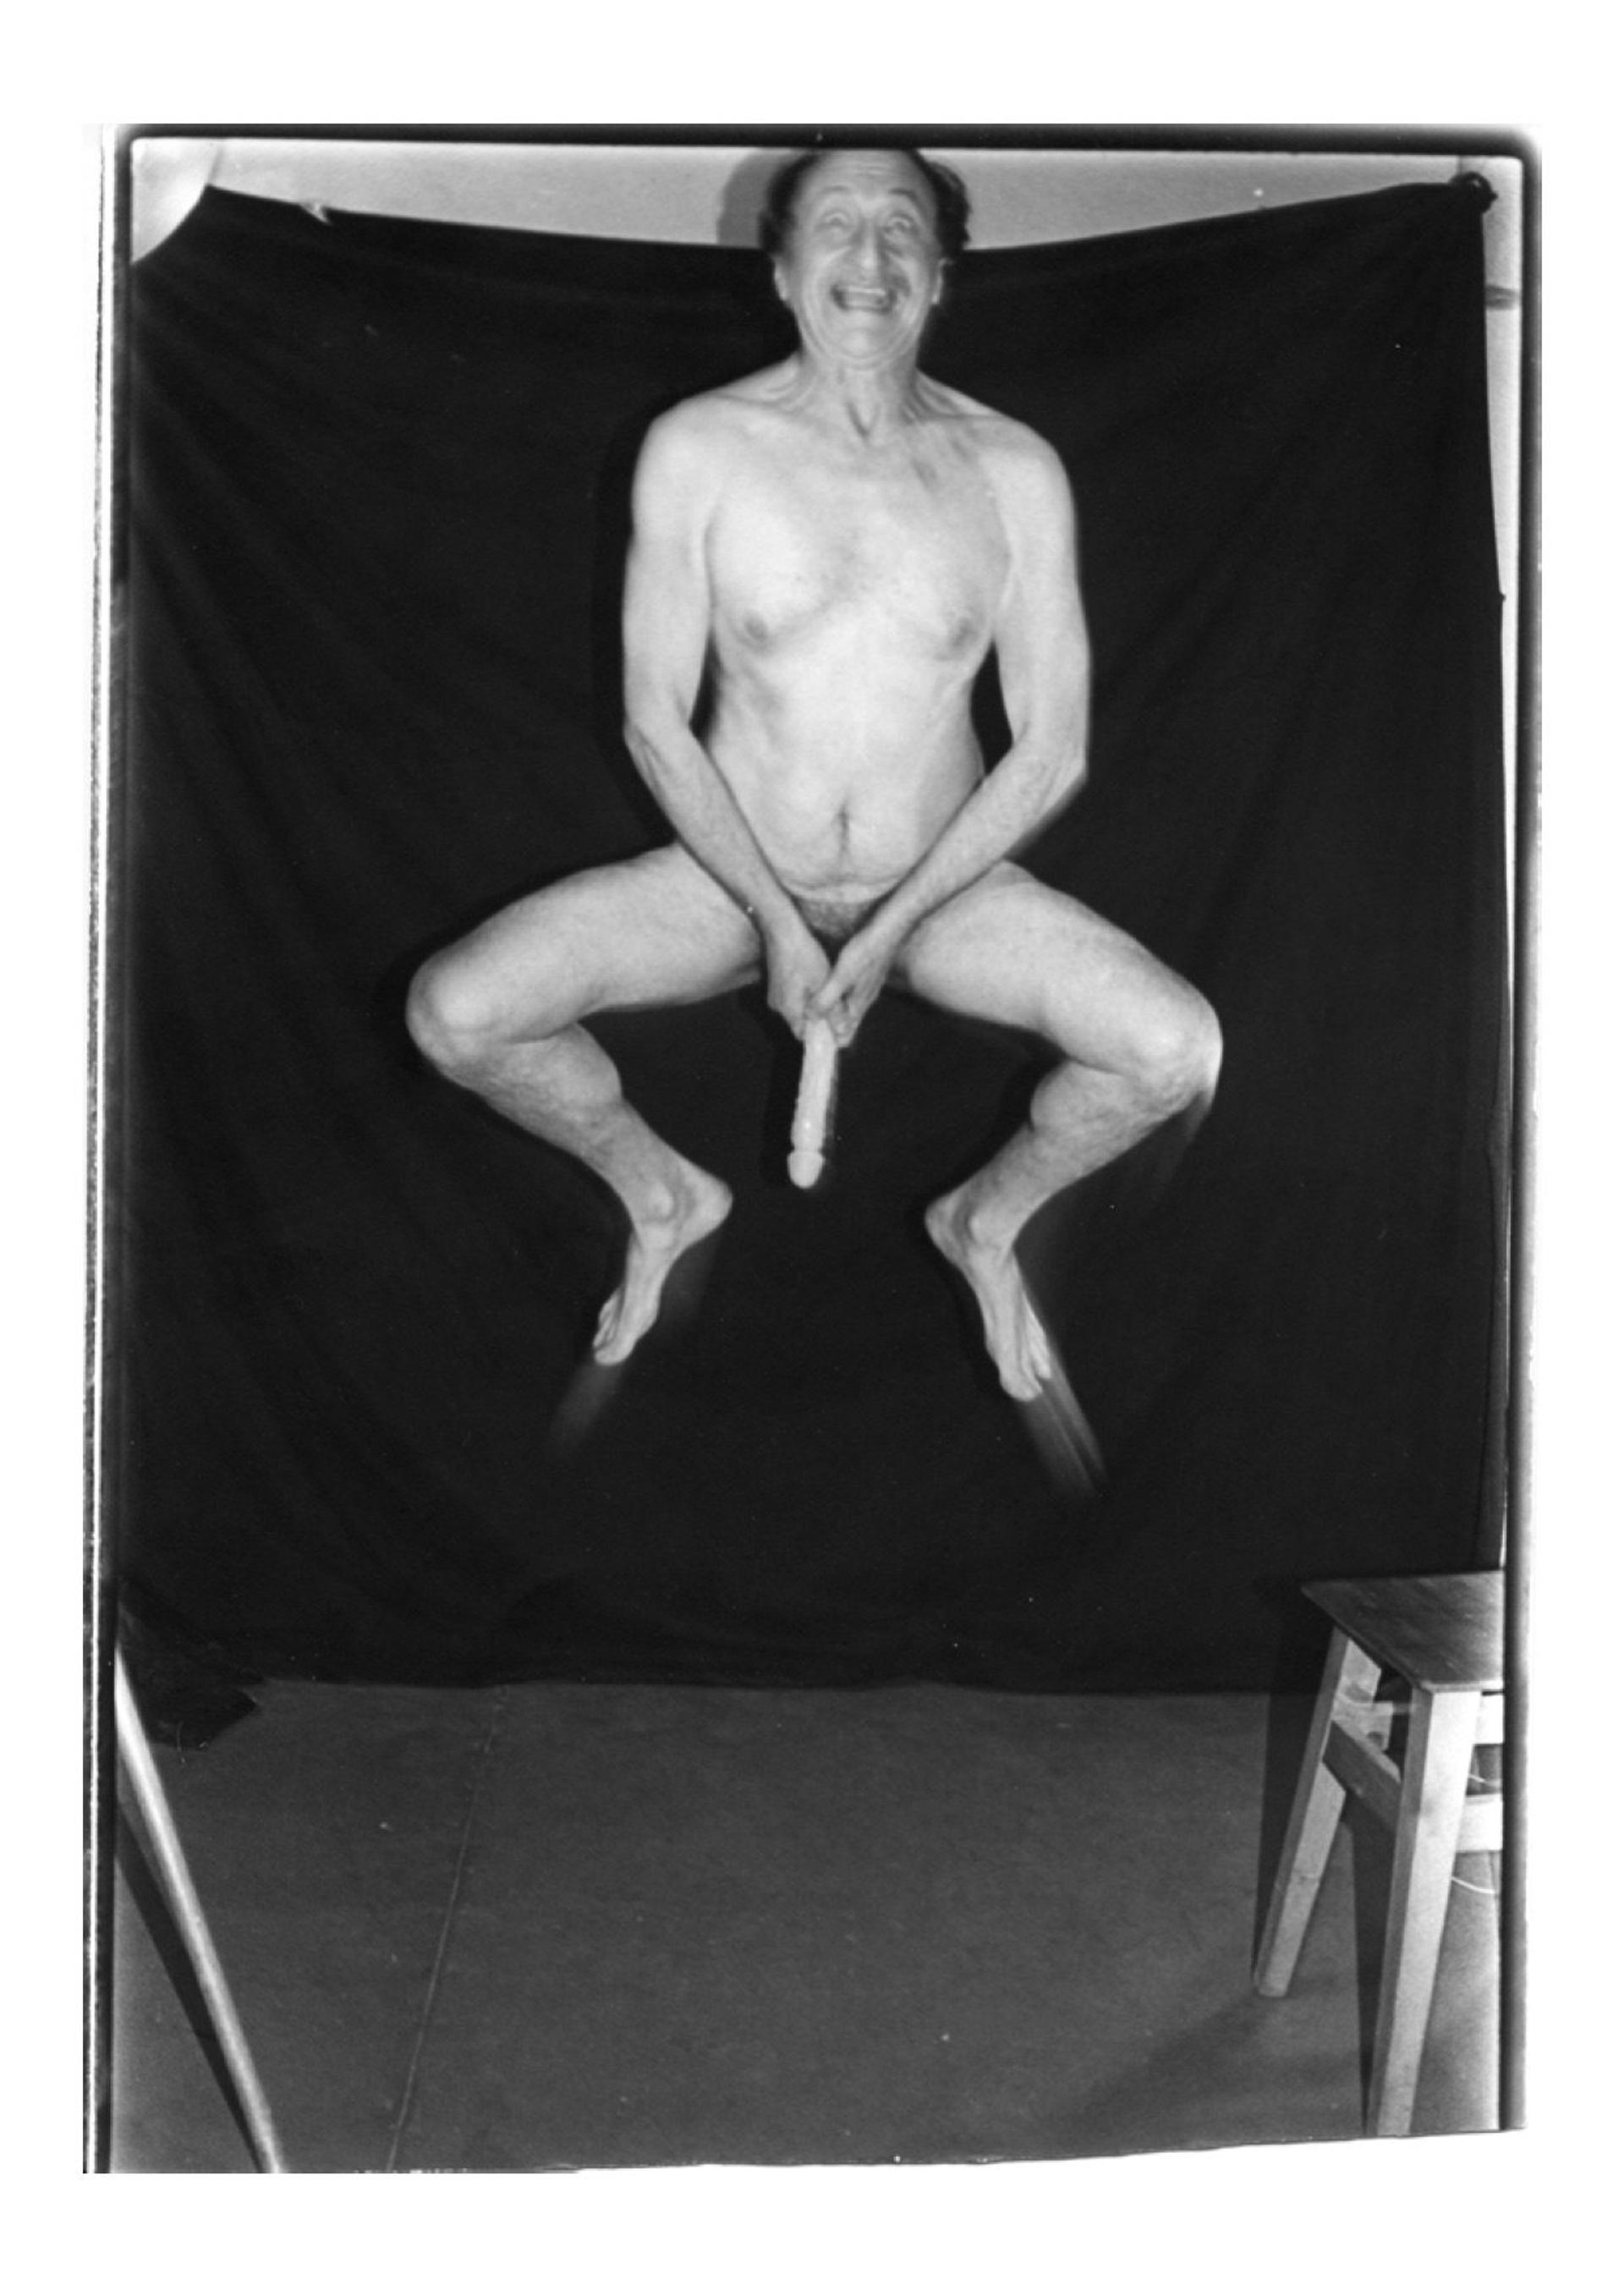 Hero, with Dildo: BORIS MIKHAILOV’s Nude Self-Portraits